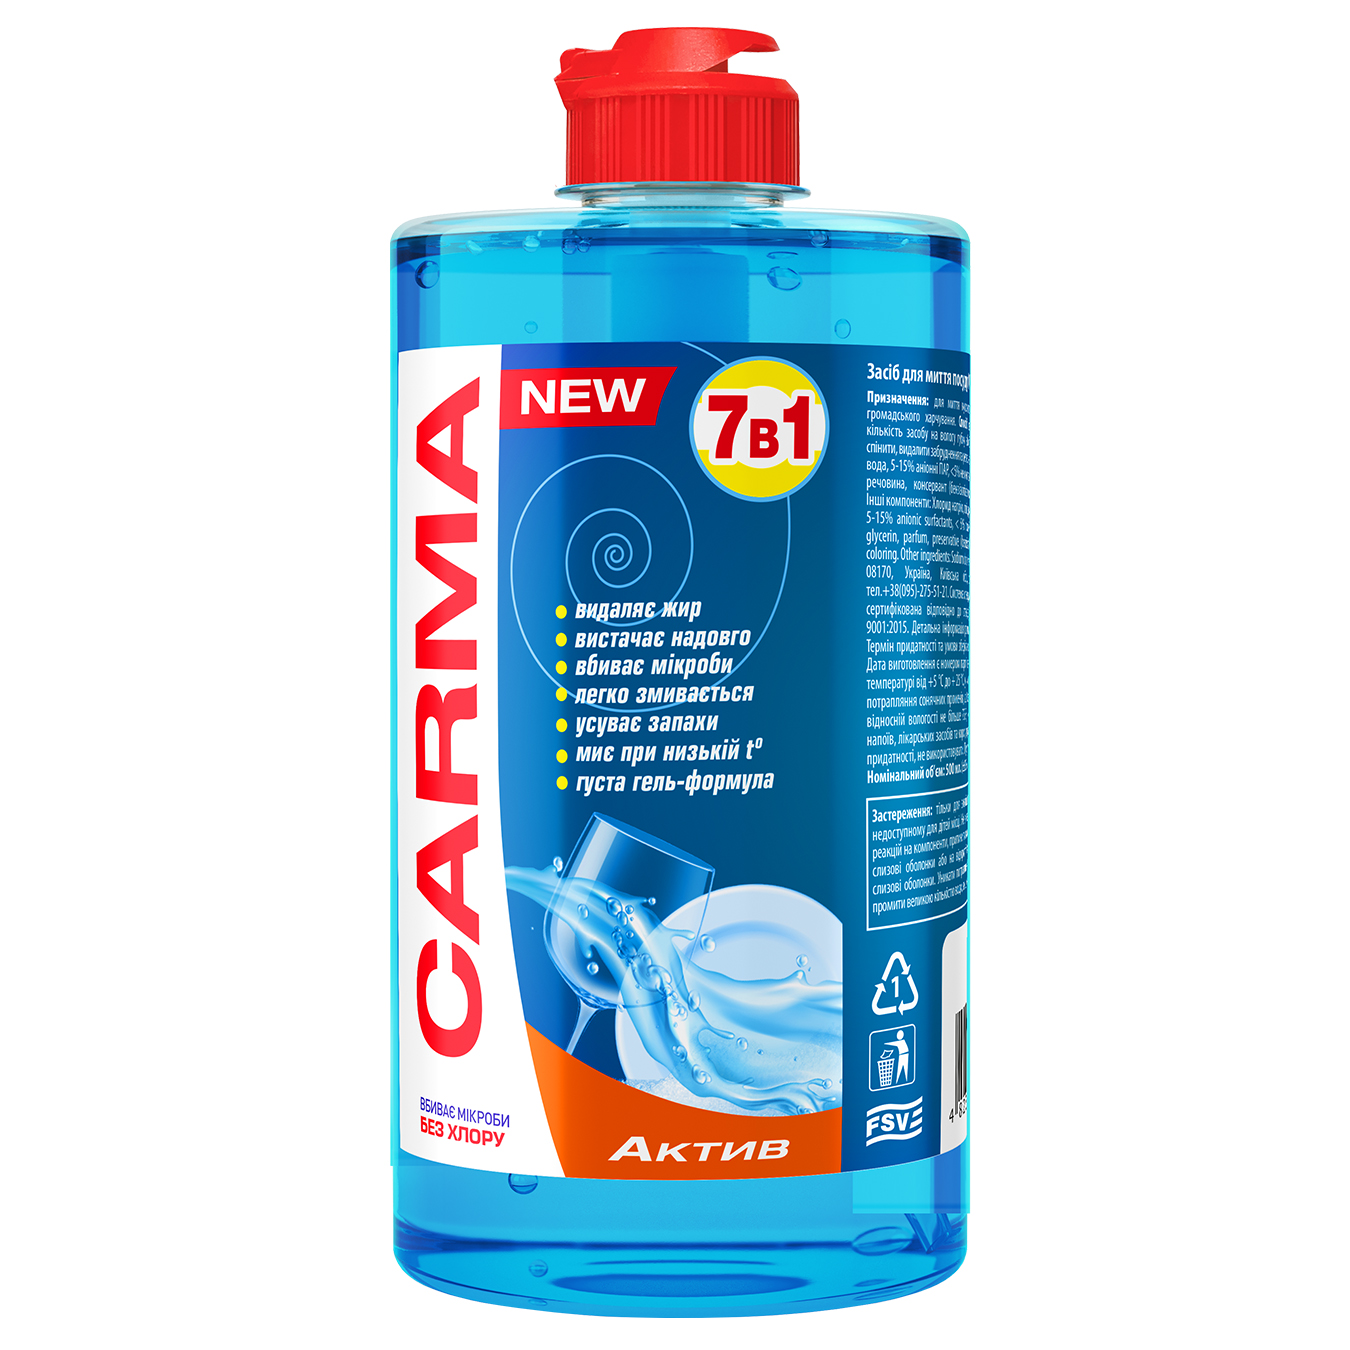 Carma Active dishwashing liquid 500 ml